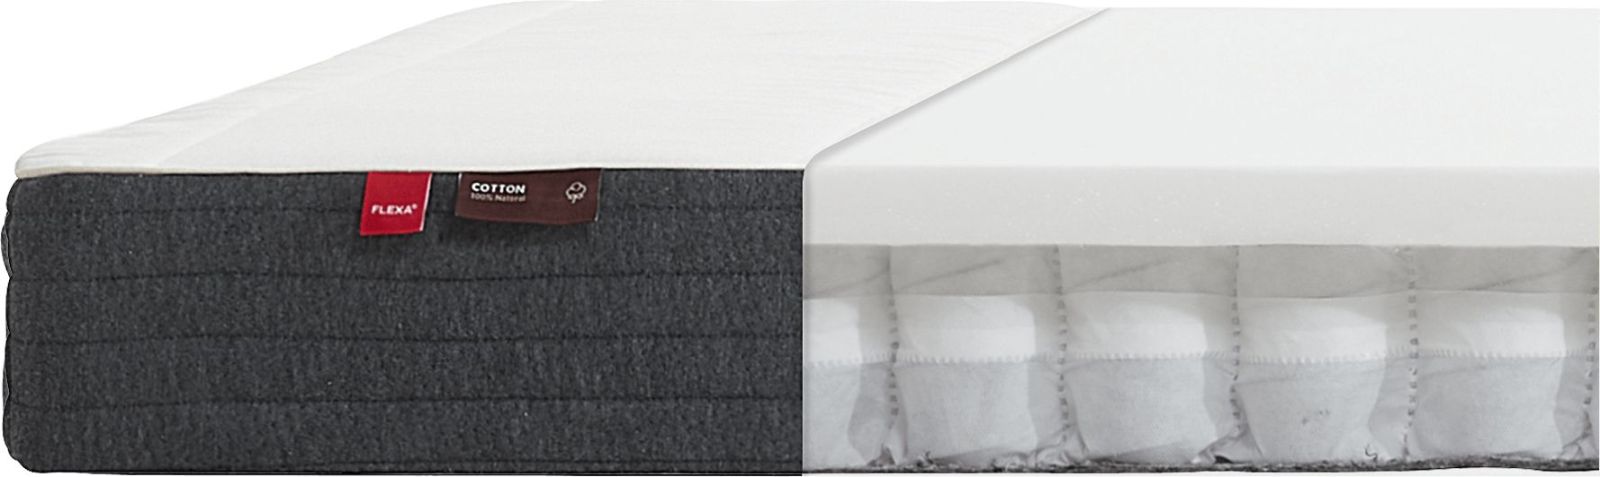 Levně Flexa Pružinová matrace Flexa - Sleep s bavlněným potahem 200x90 cm